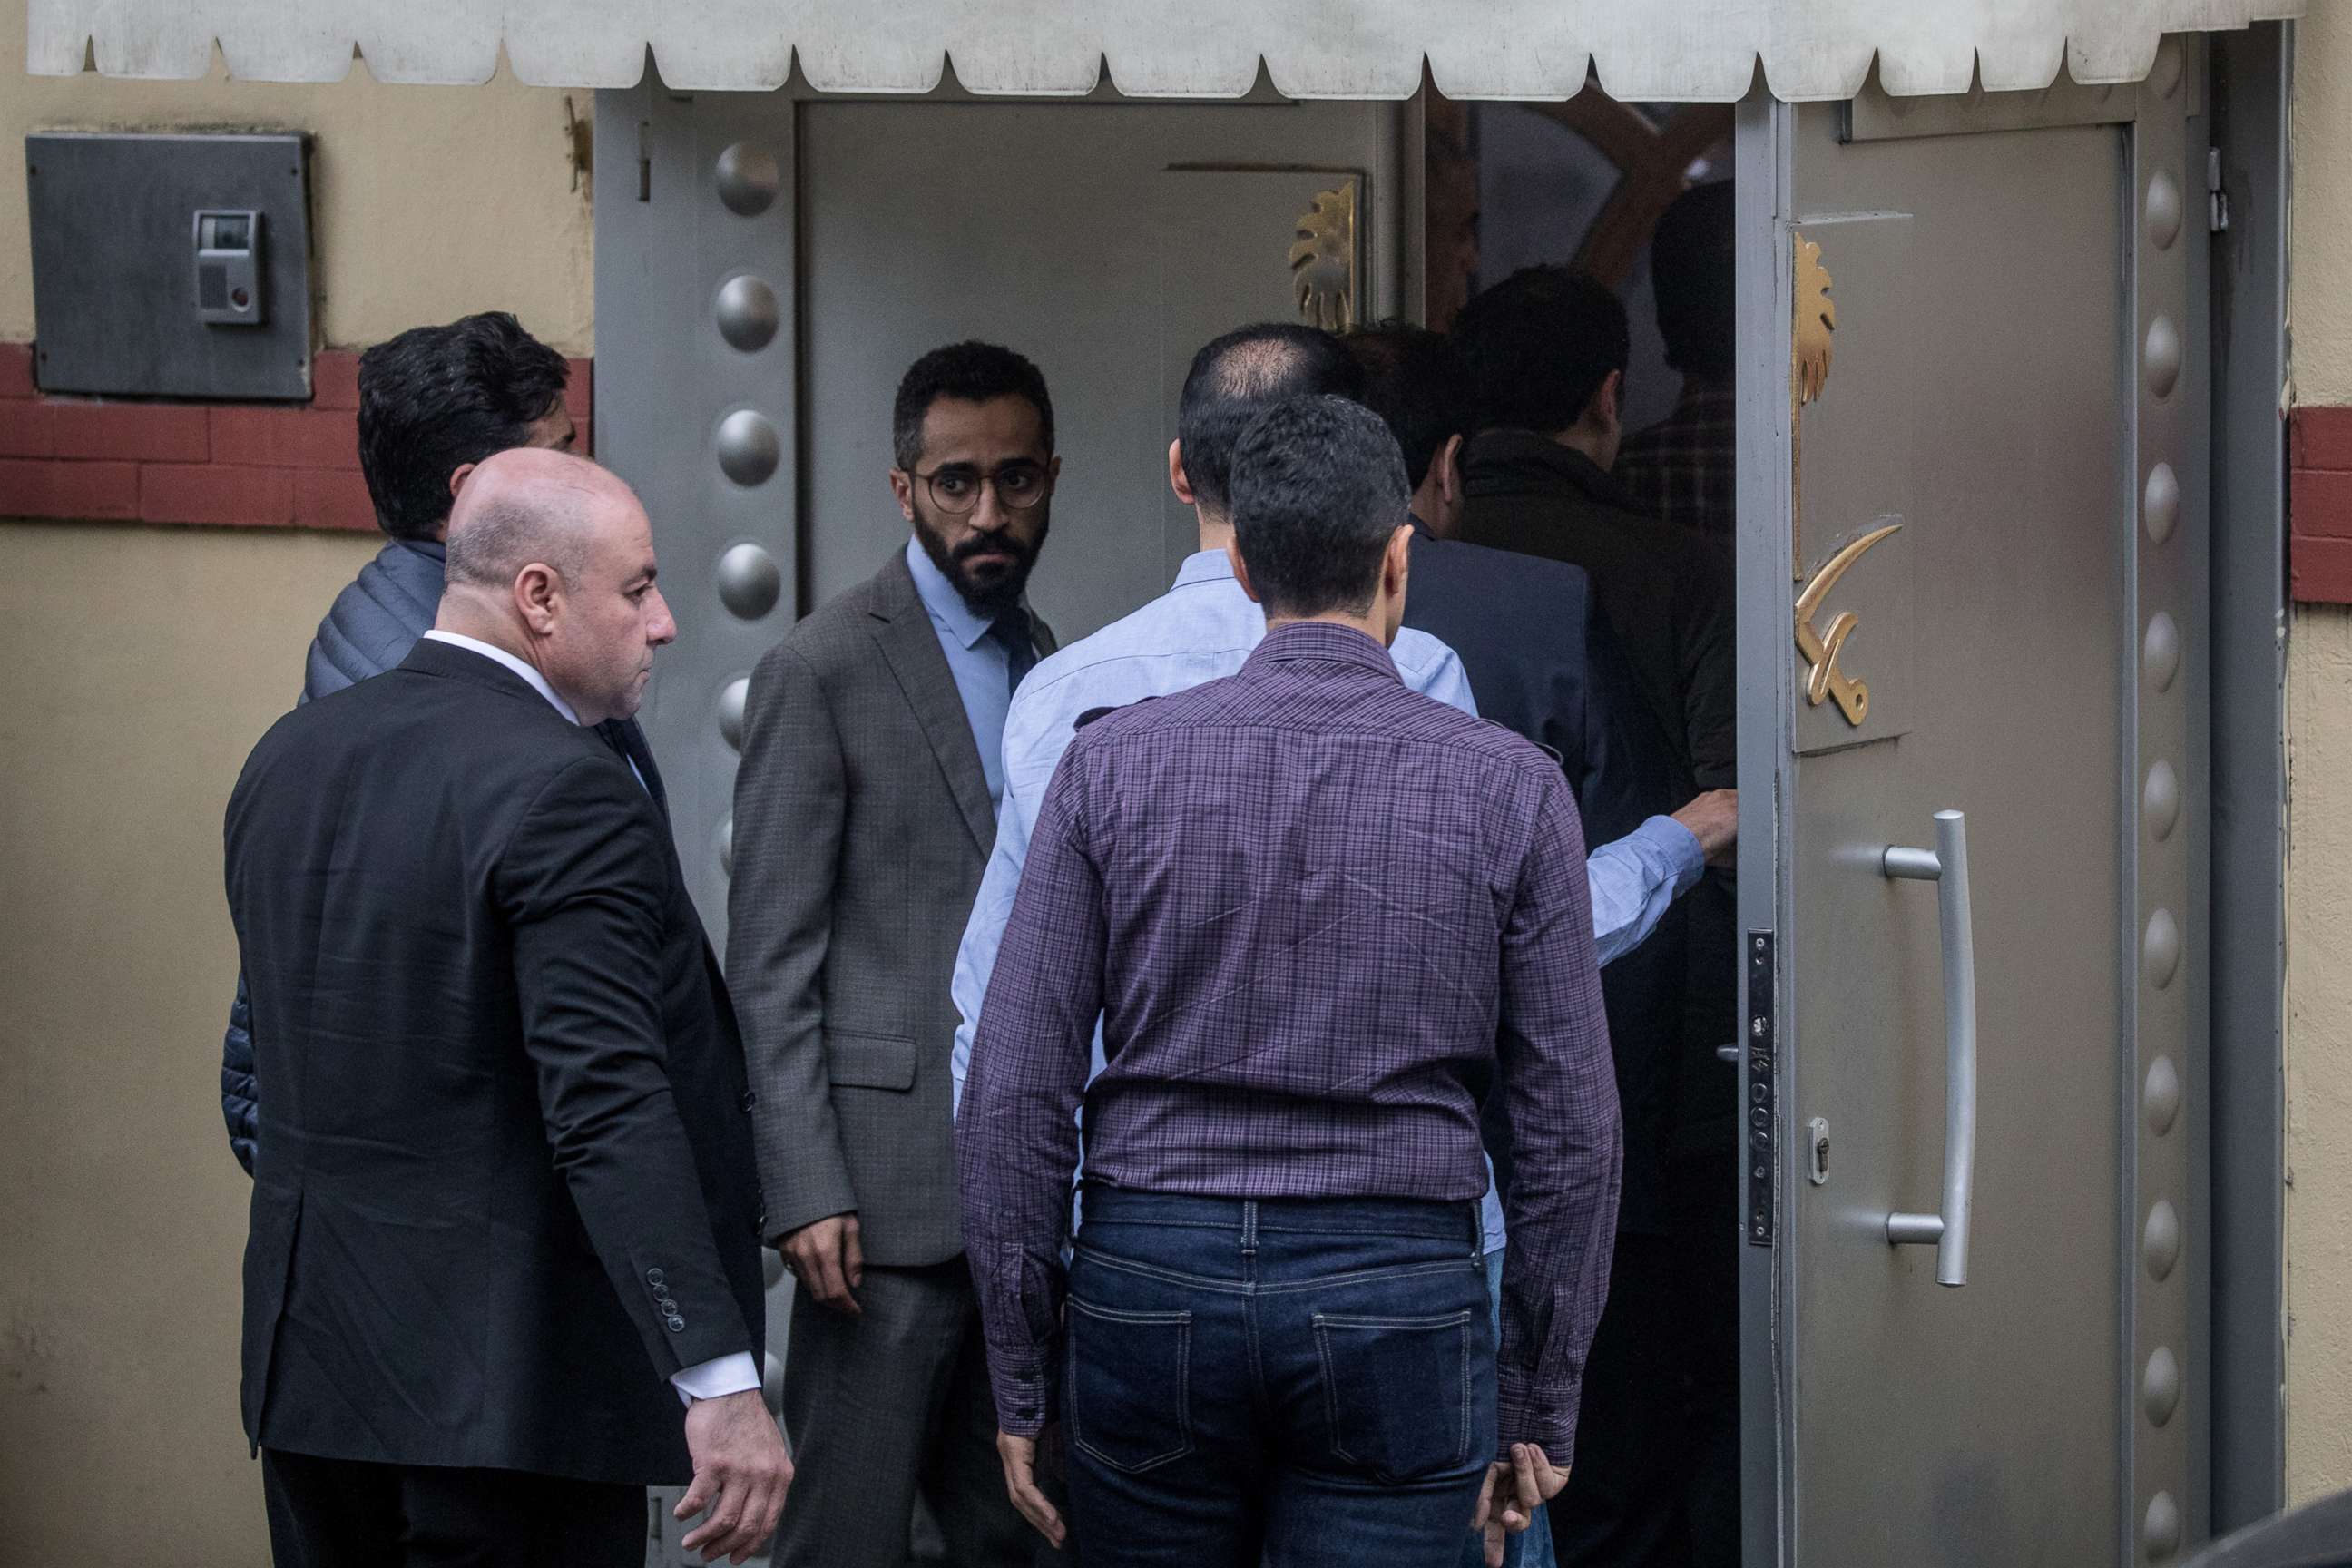 PHOTO: Saudi investigators arrive ahead of Turkish police at the Saudi Arabian consulate on Oct. 15, 2018 in Istanbul.